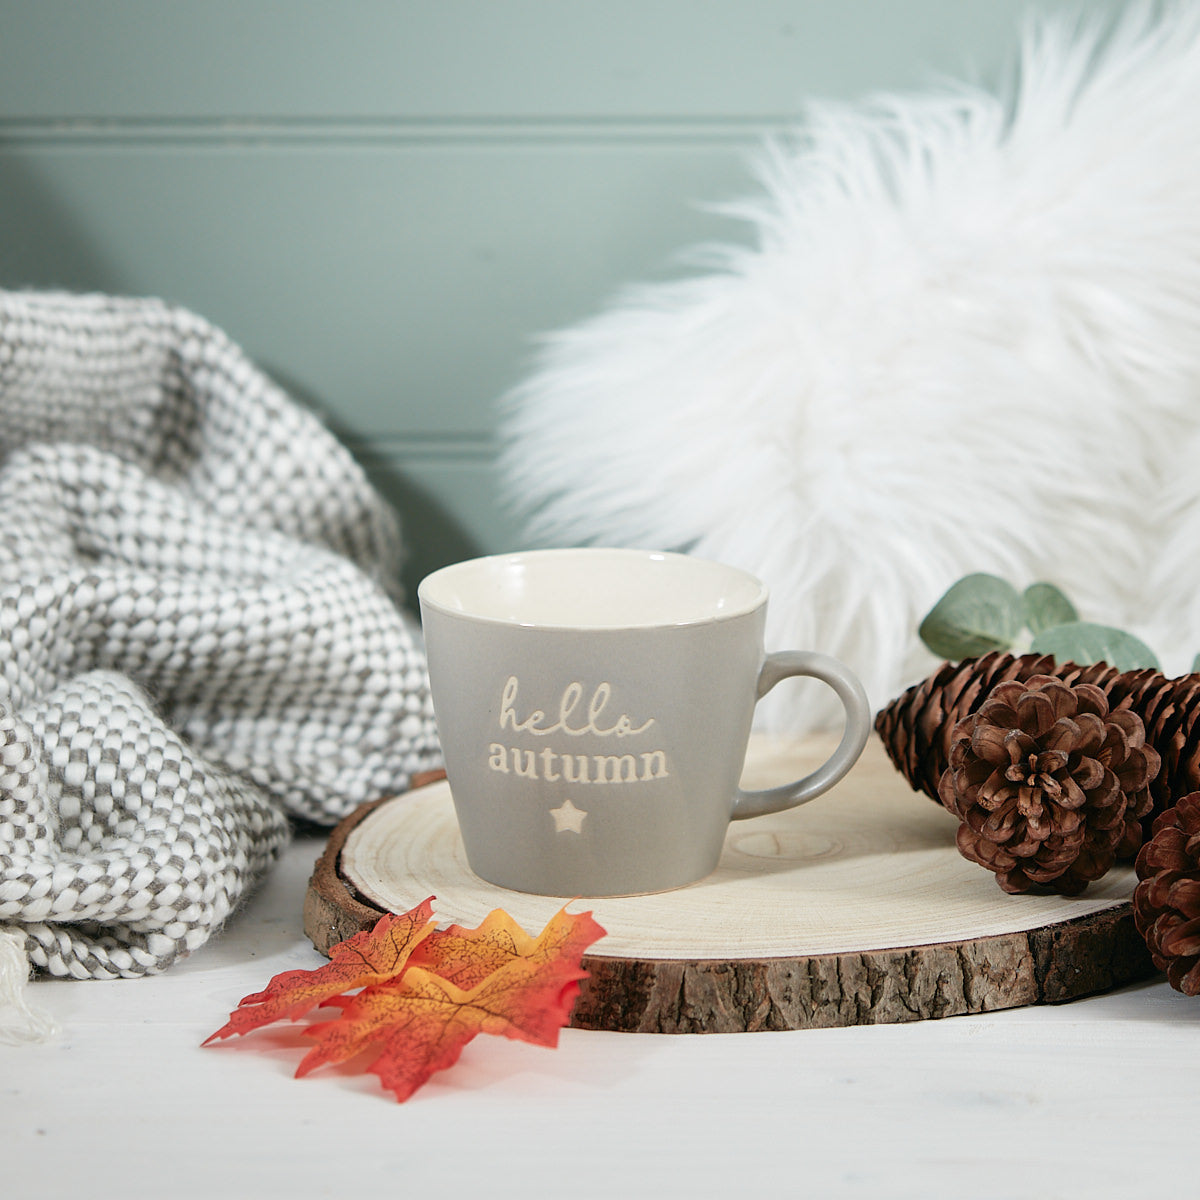 Hello autumn grey mug with star